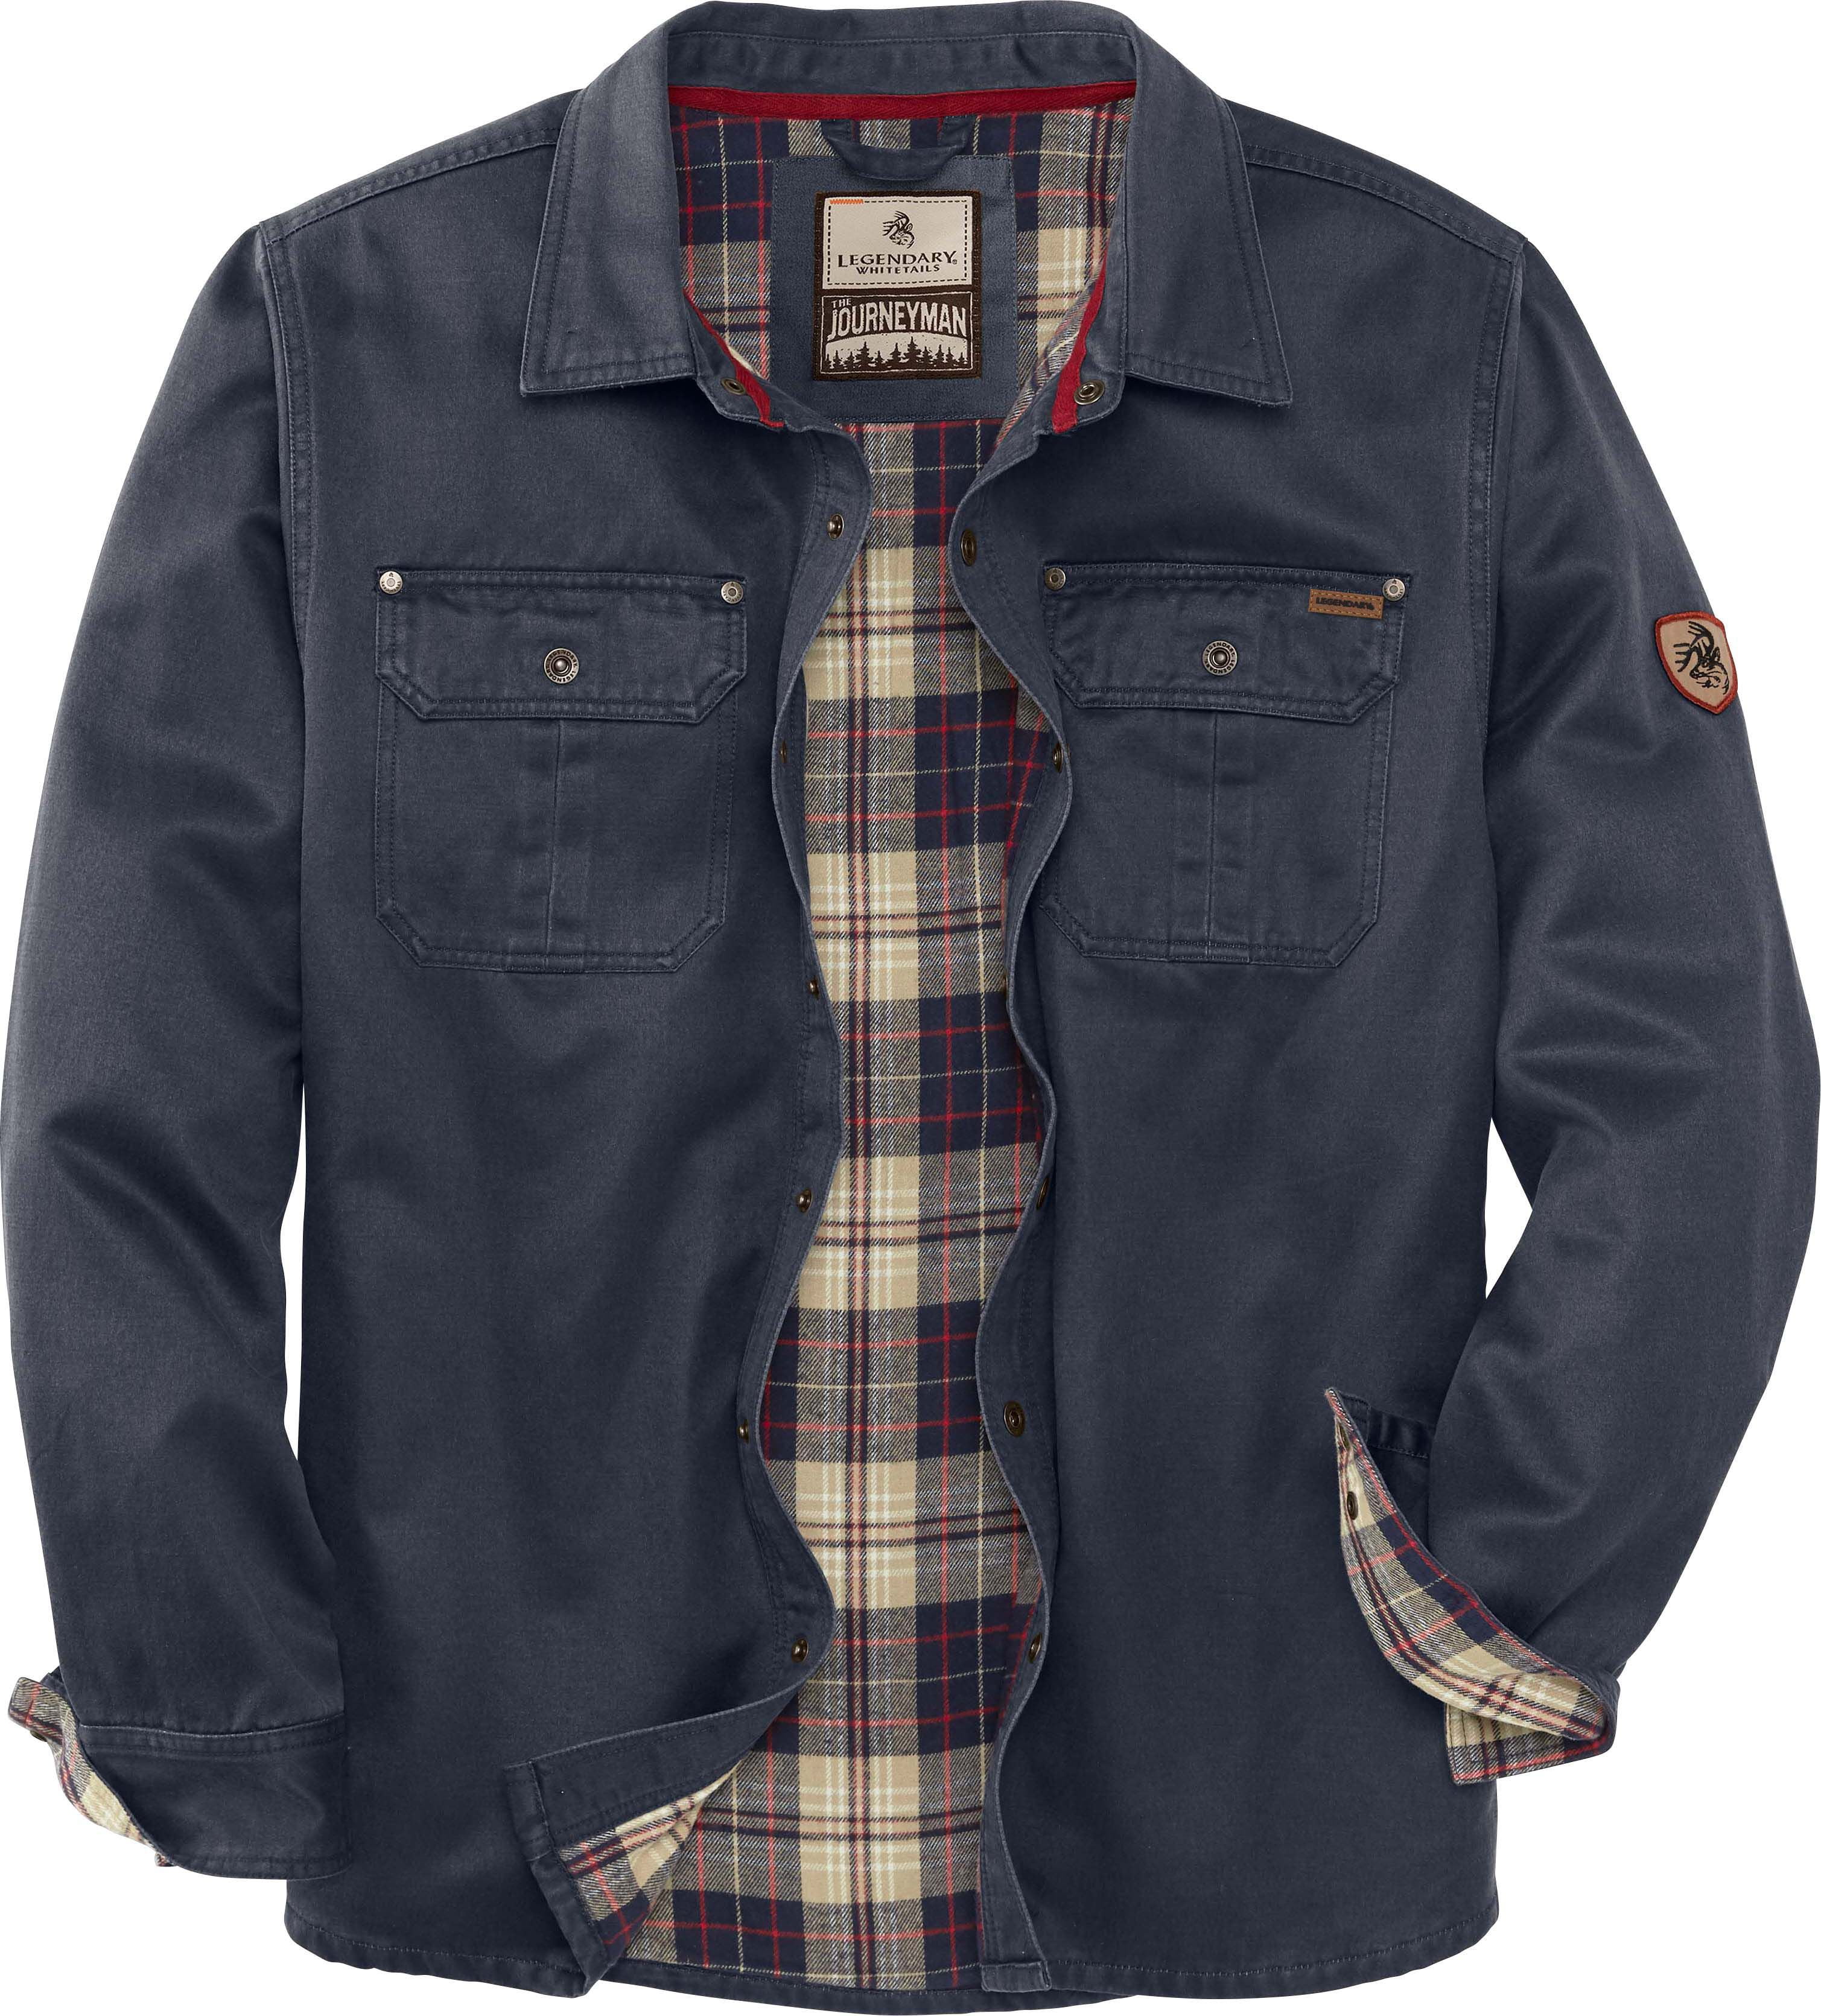 Legendary Whitetails Men's Journeyman Rugged Flannel Lined Shirt Jacket ...